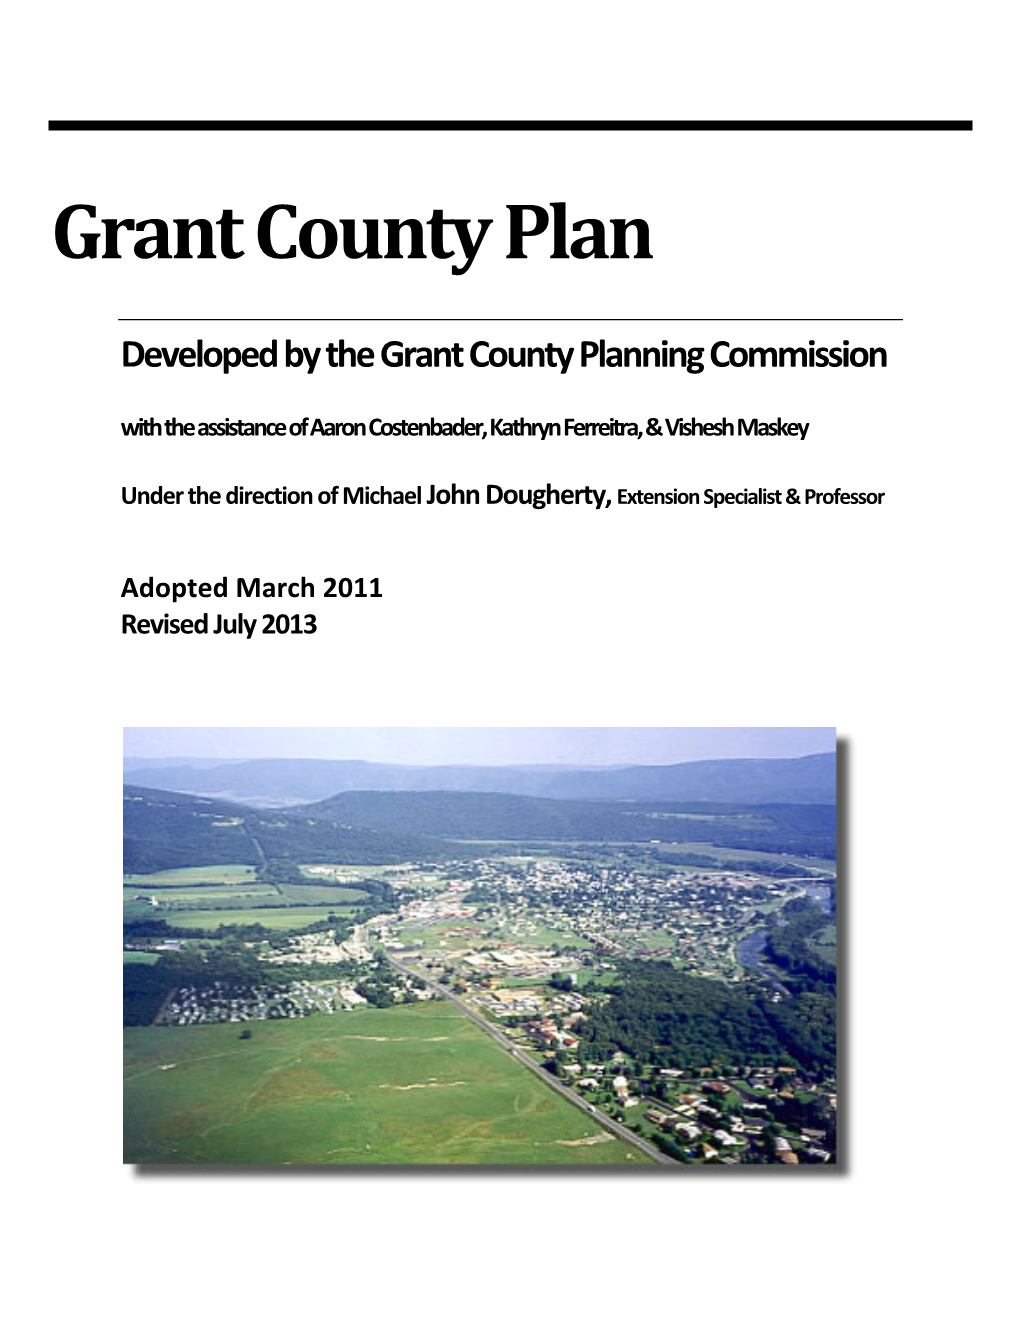 Grant County Plan PC 12-5-13